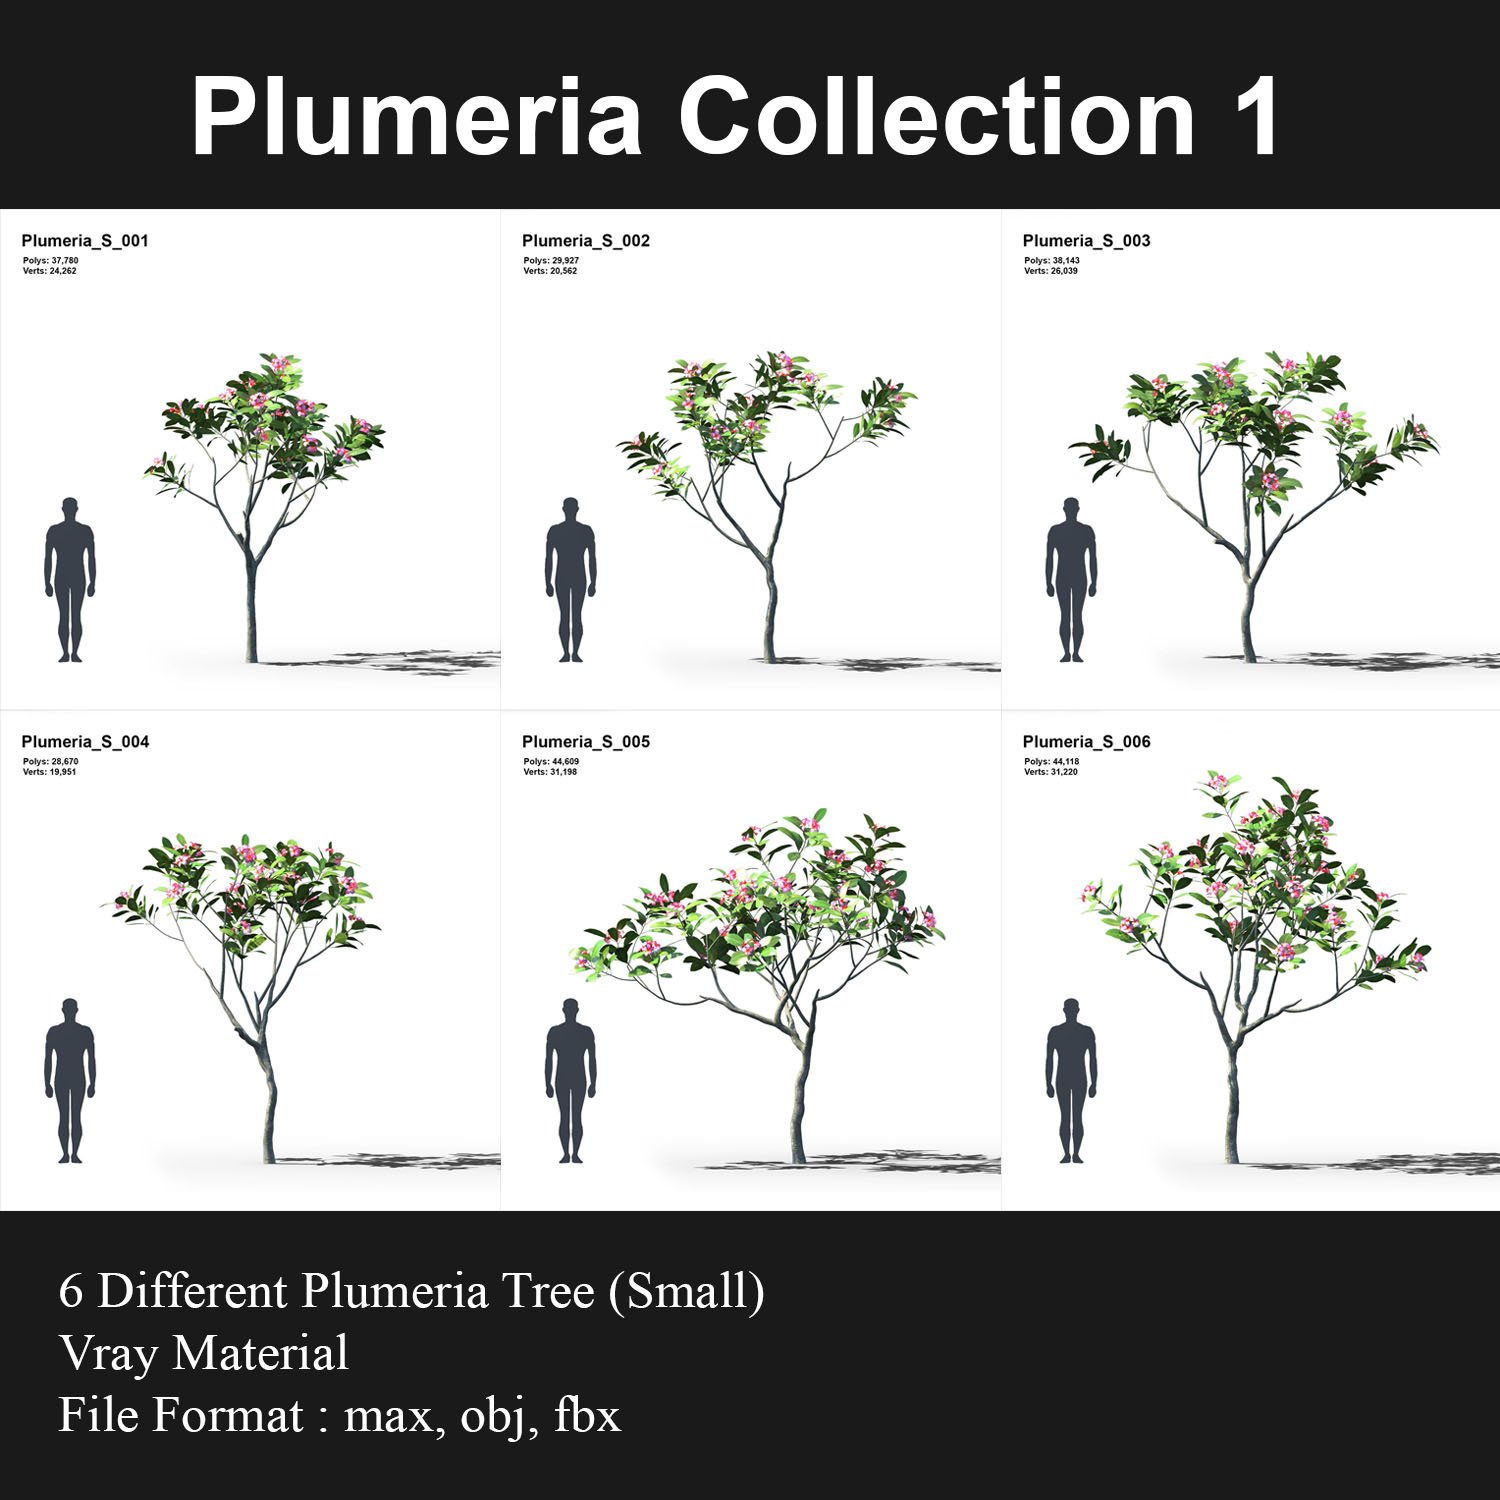 Plumeria Collection